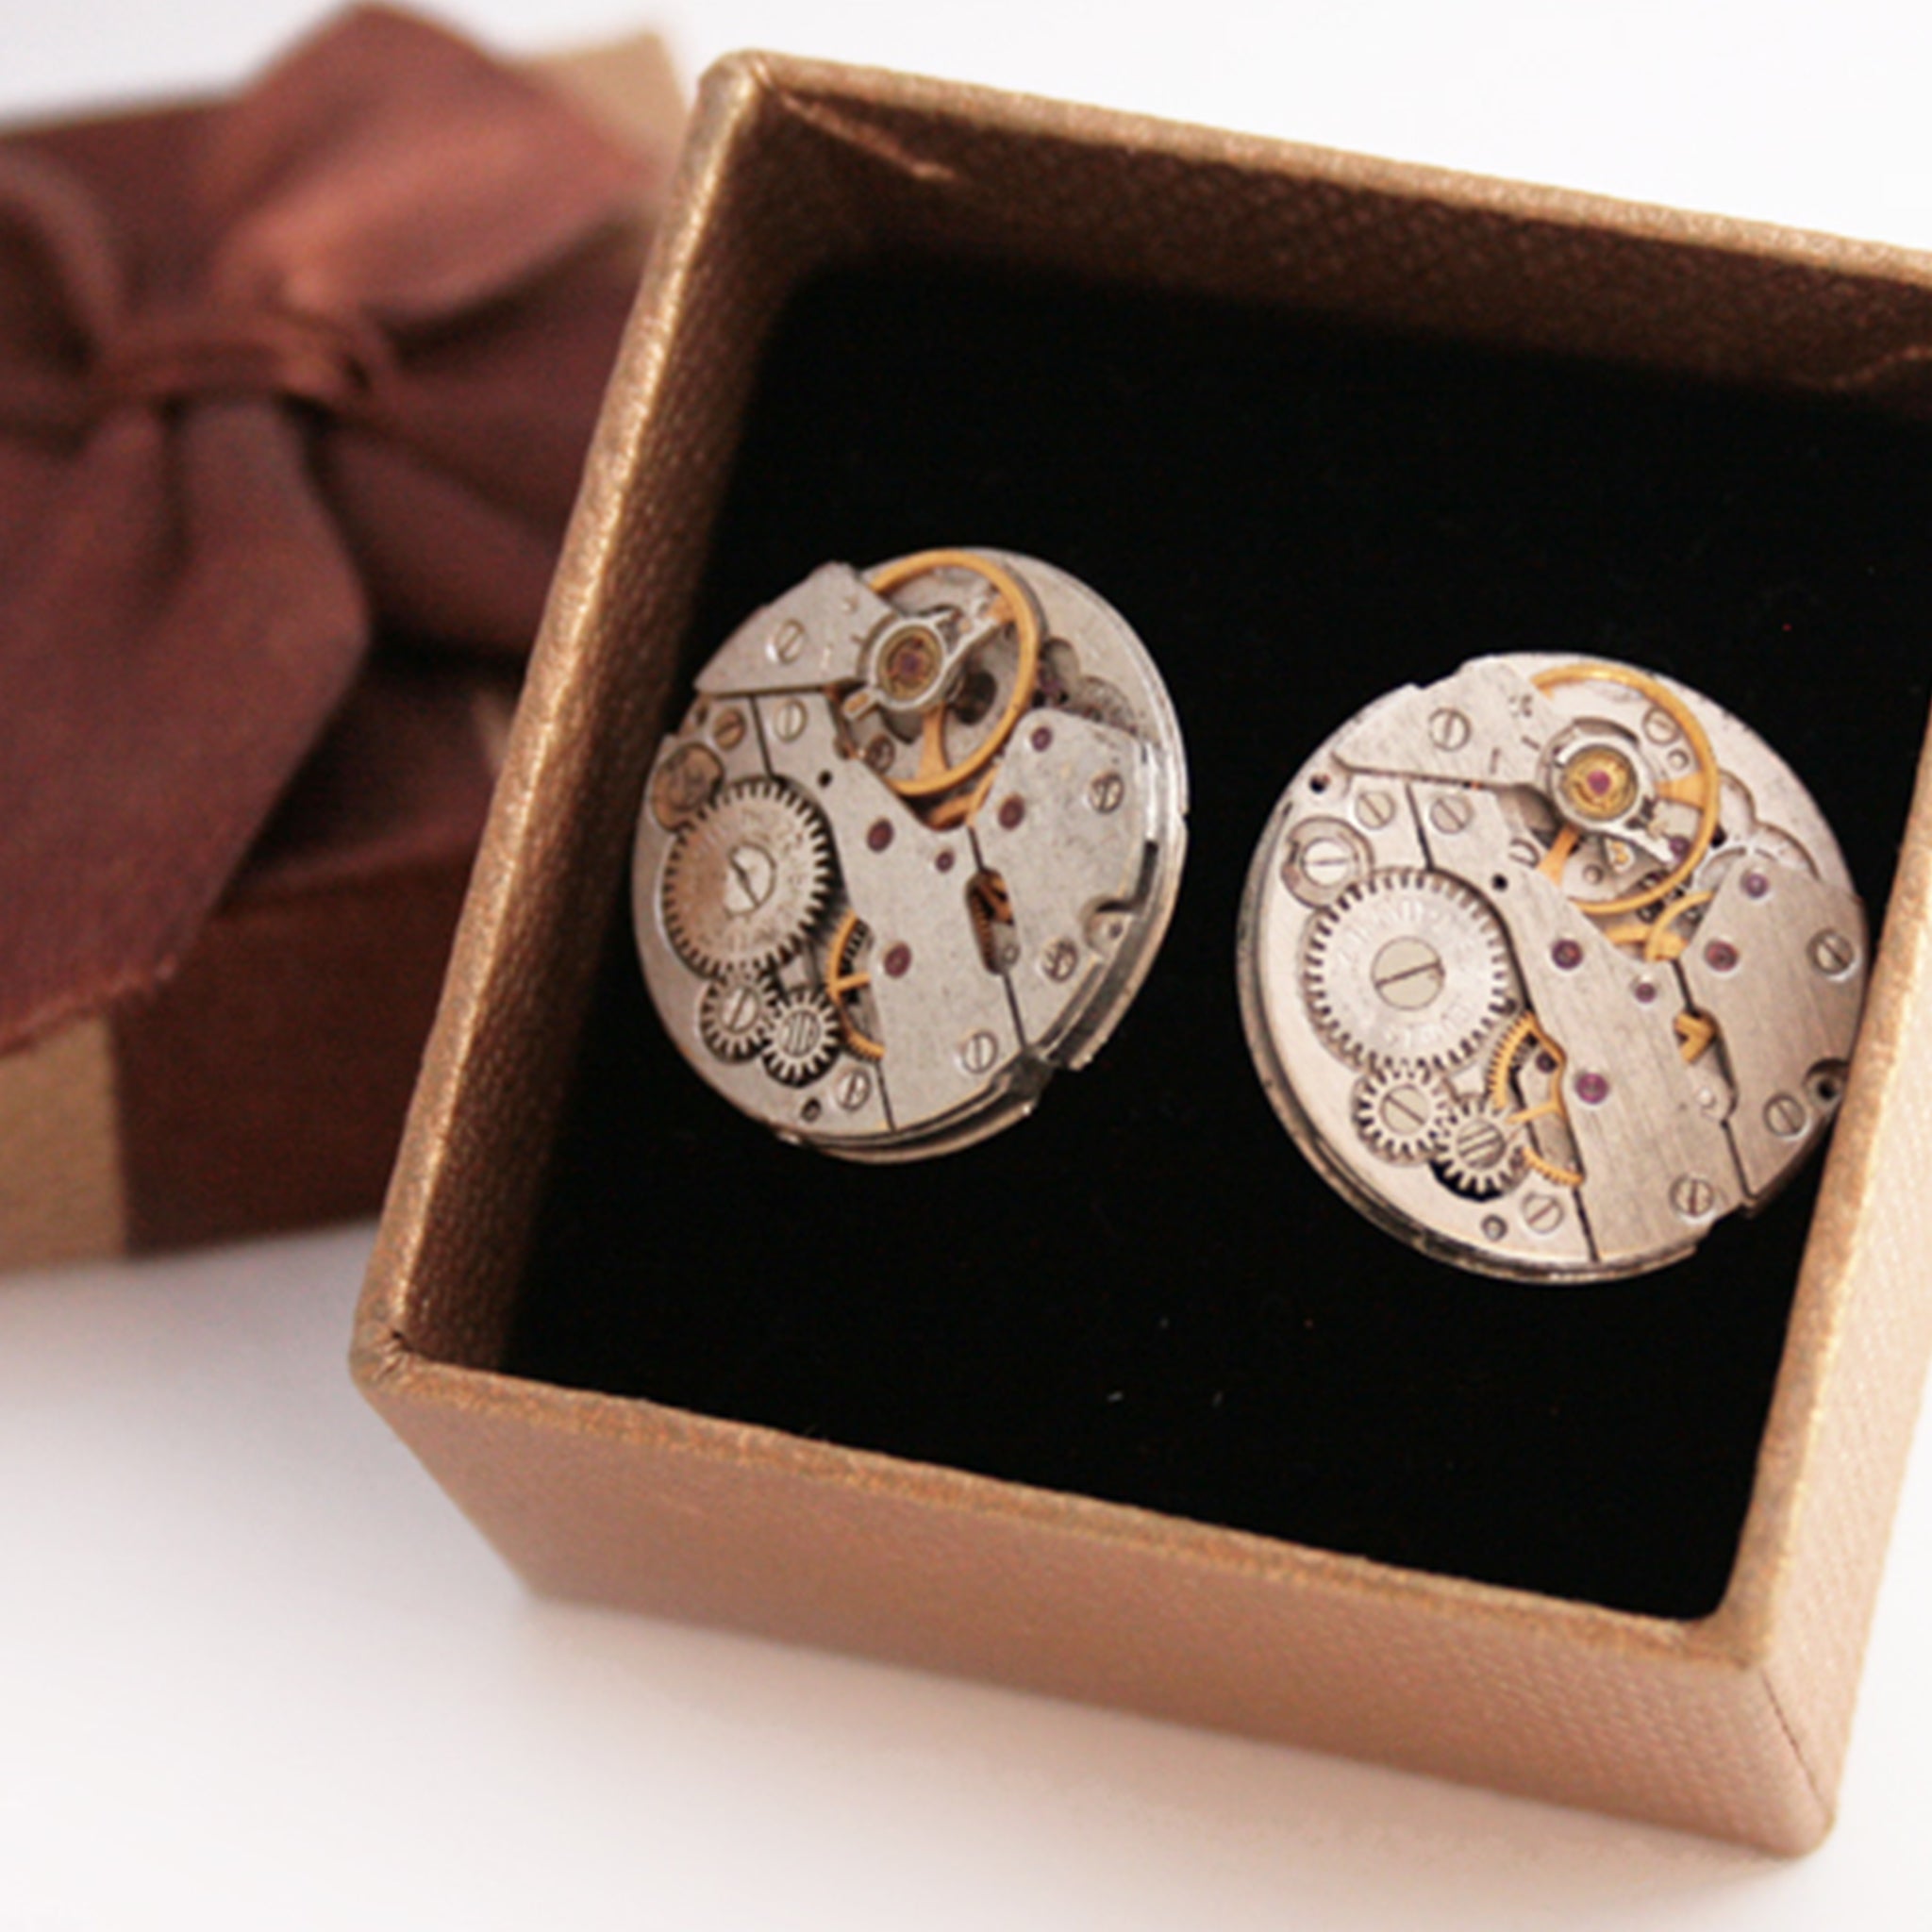 novelty wedding cufflinks in steampunk style made of watch movements